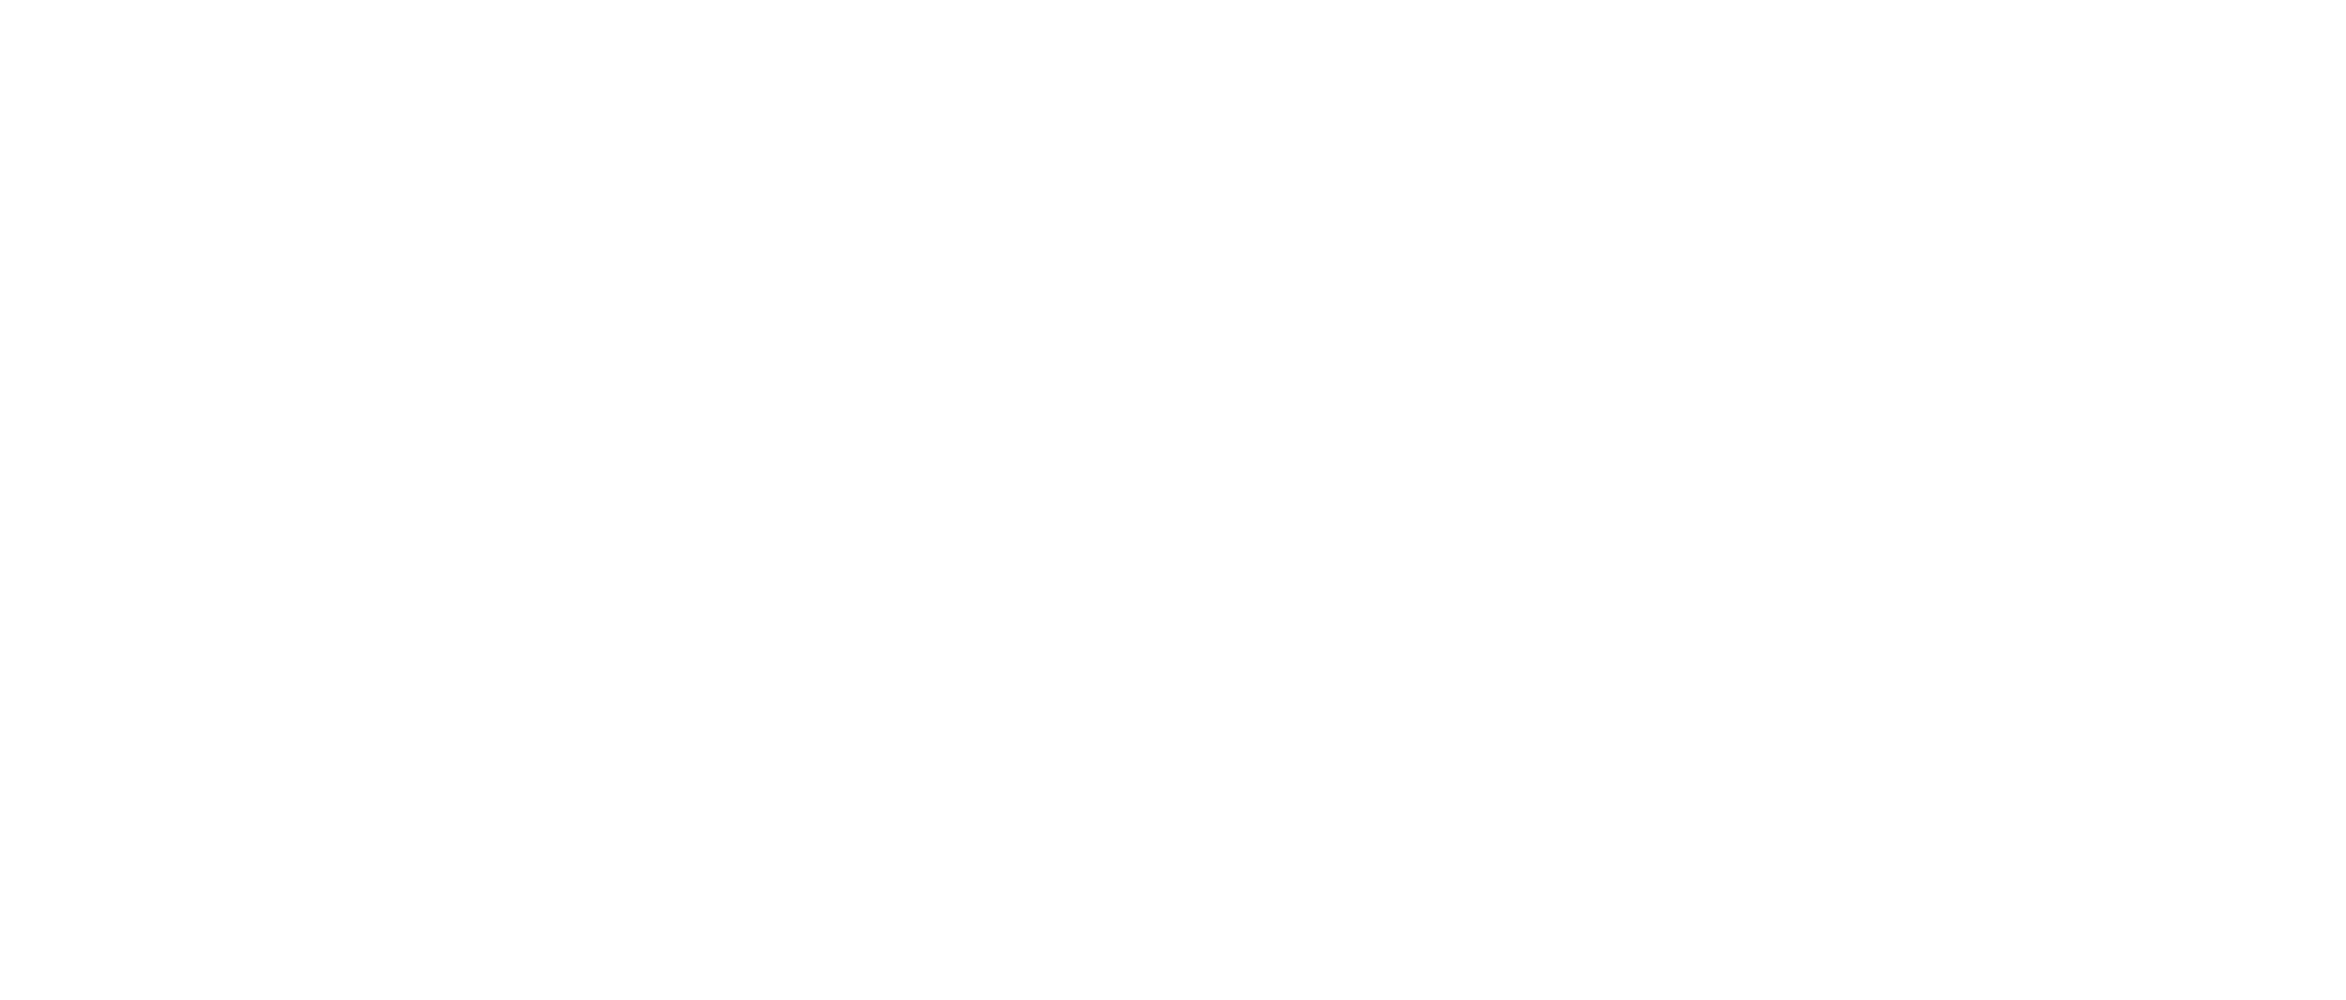 Real Outdoor Food shop logo